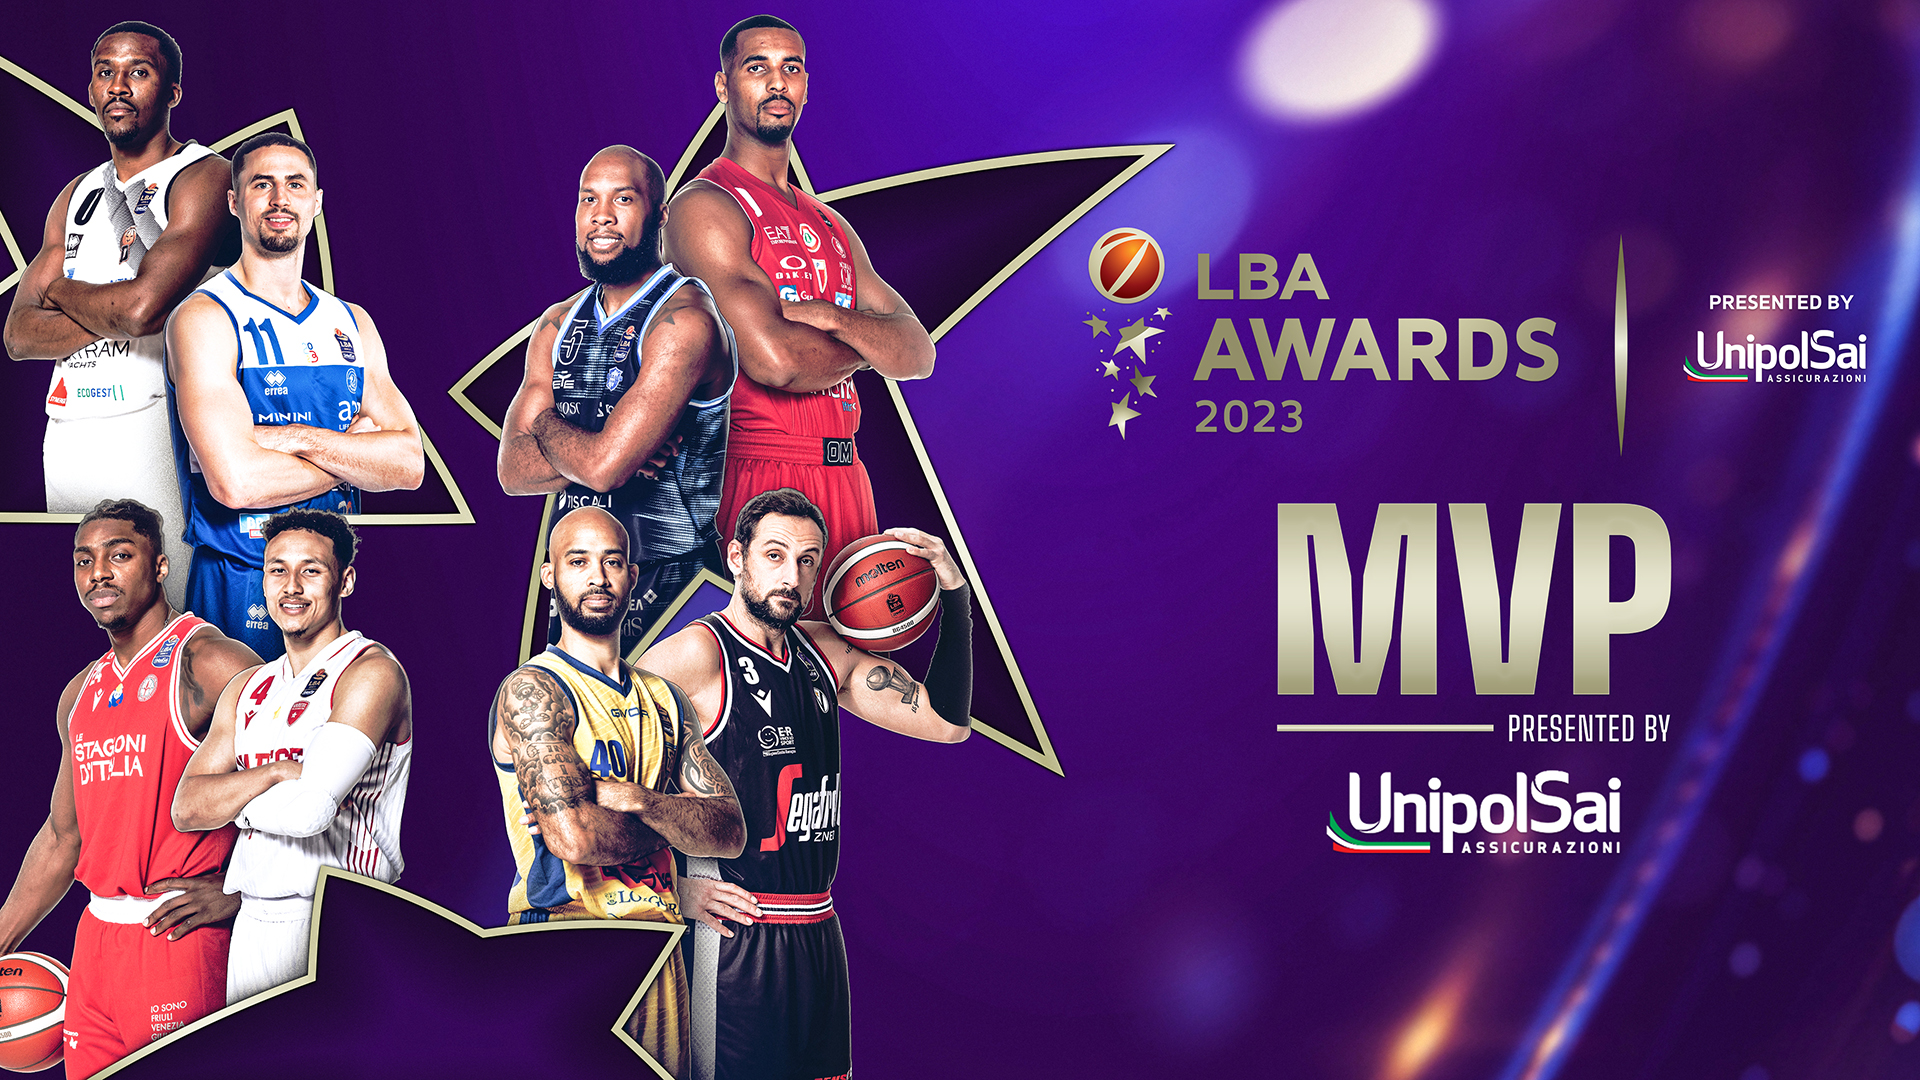 LBA Awards 2023